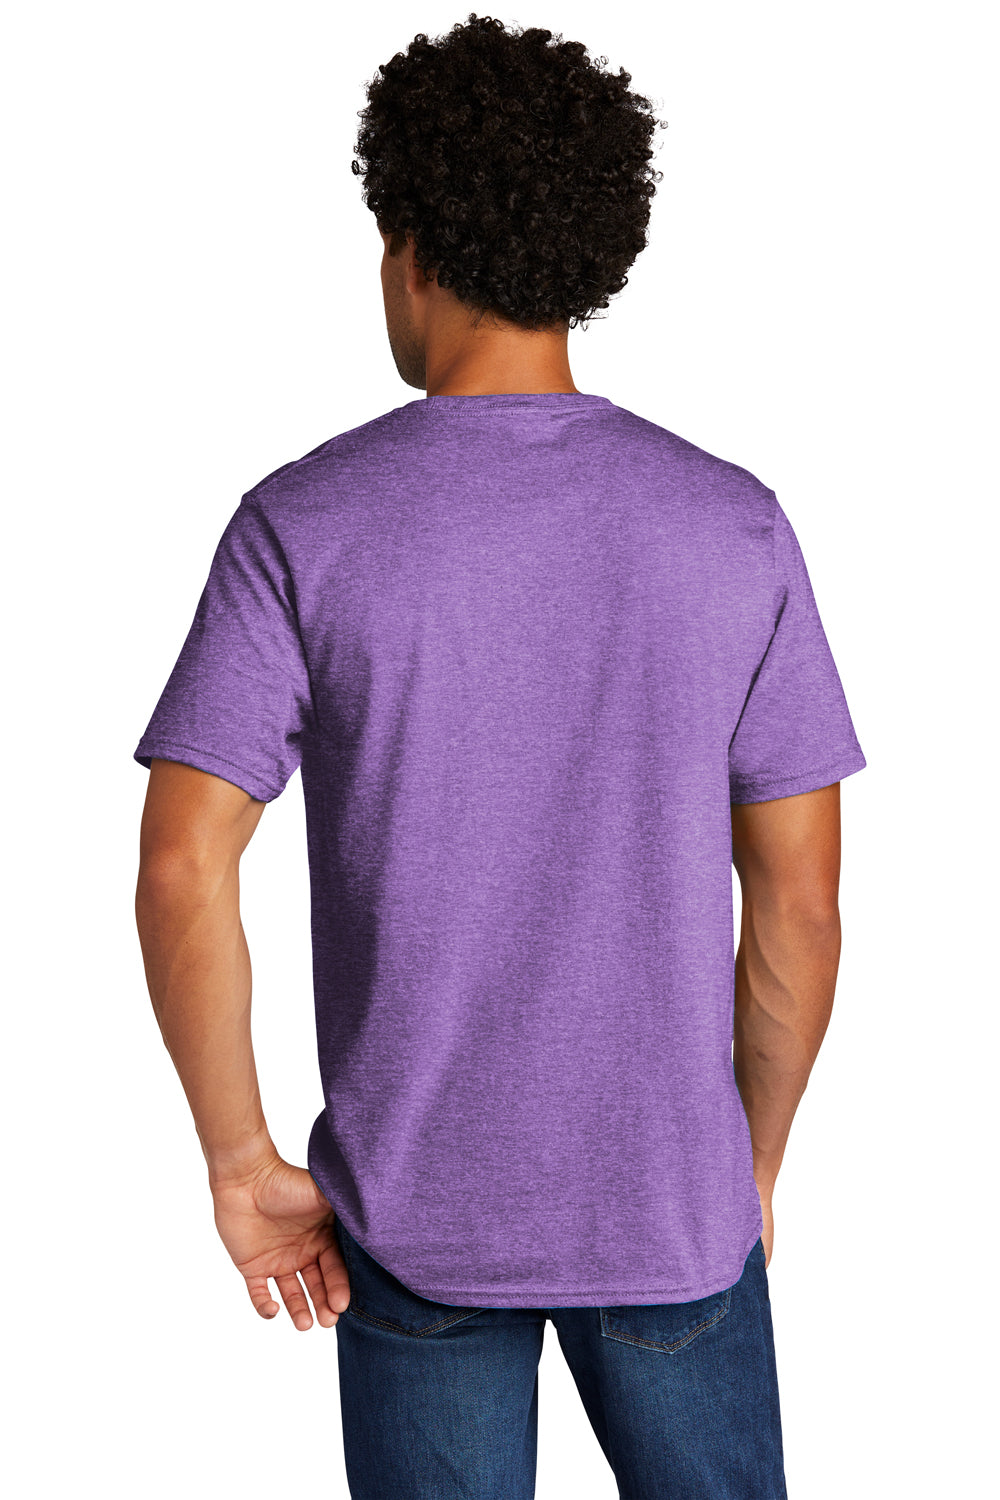 Port & Company Mens Short Sleeve Crewneck T-Shirt Heather Team Purple Side